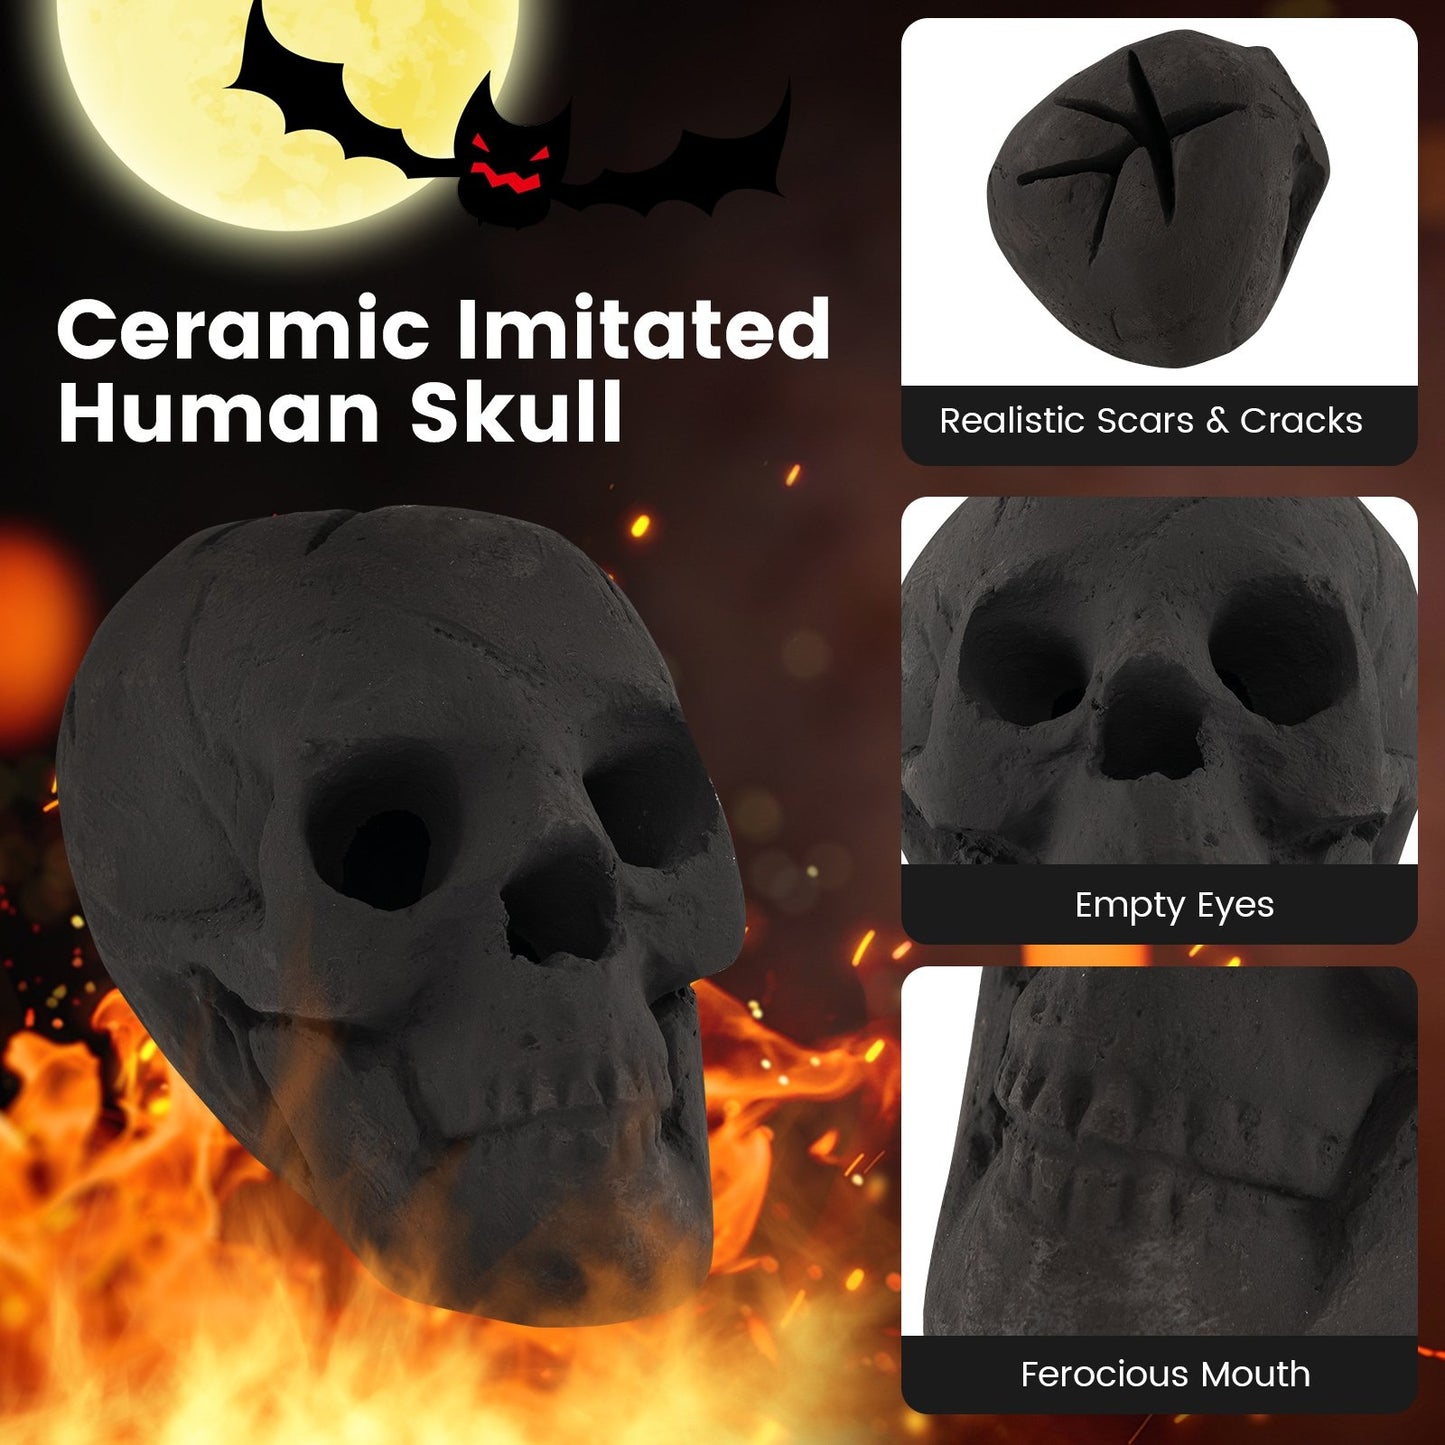 Halloween Fire Pit Skull Halloween Decoration, Black